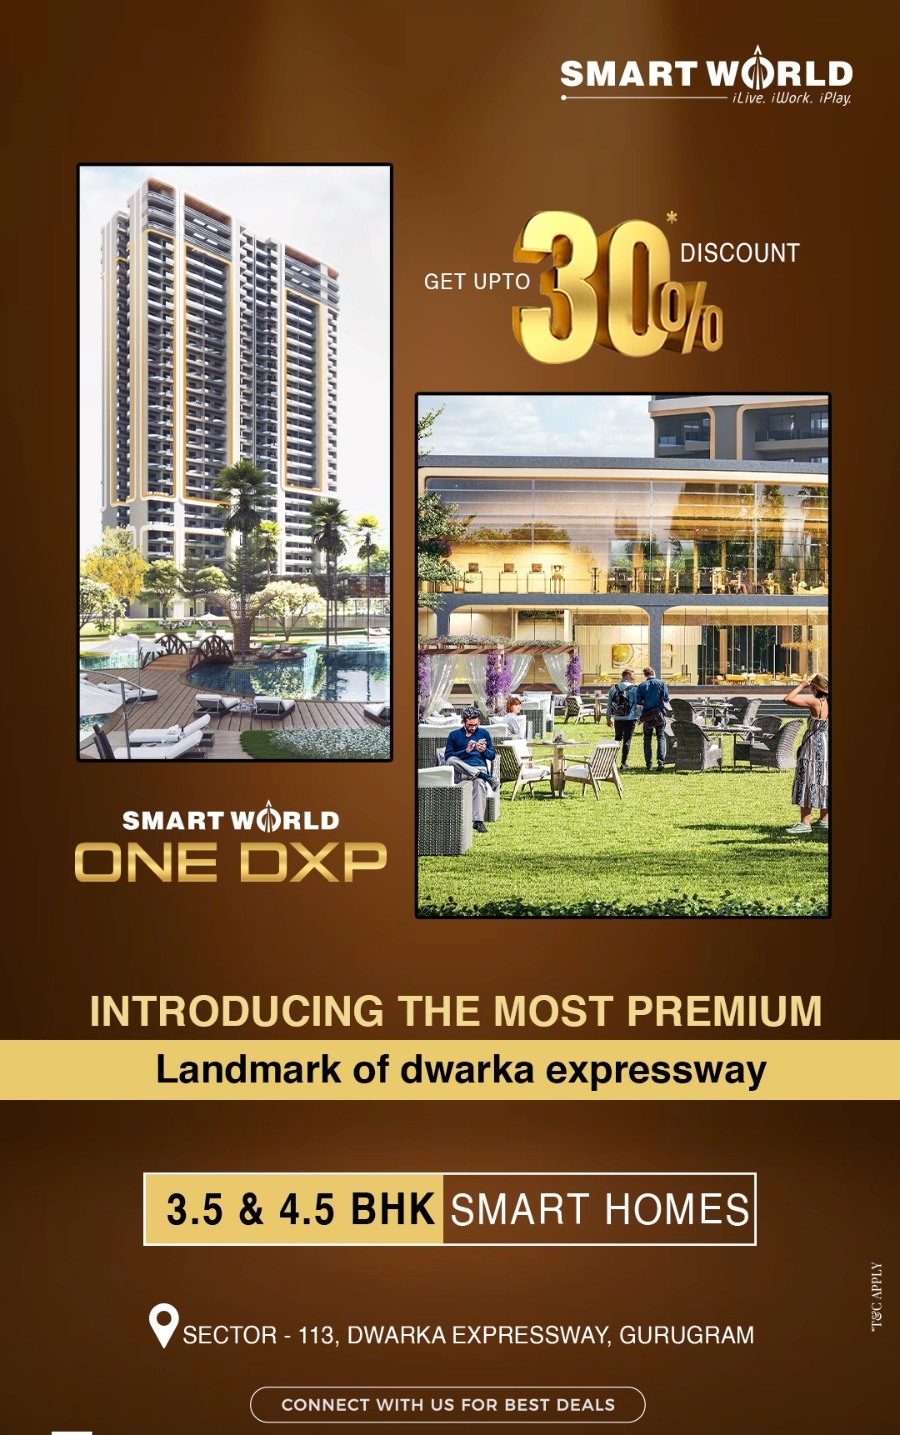 Smart World One DXP Introducing the most premium landmark of Dwarka Expressway, Gurgaon